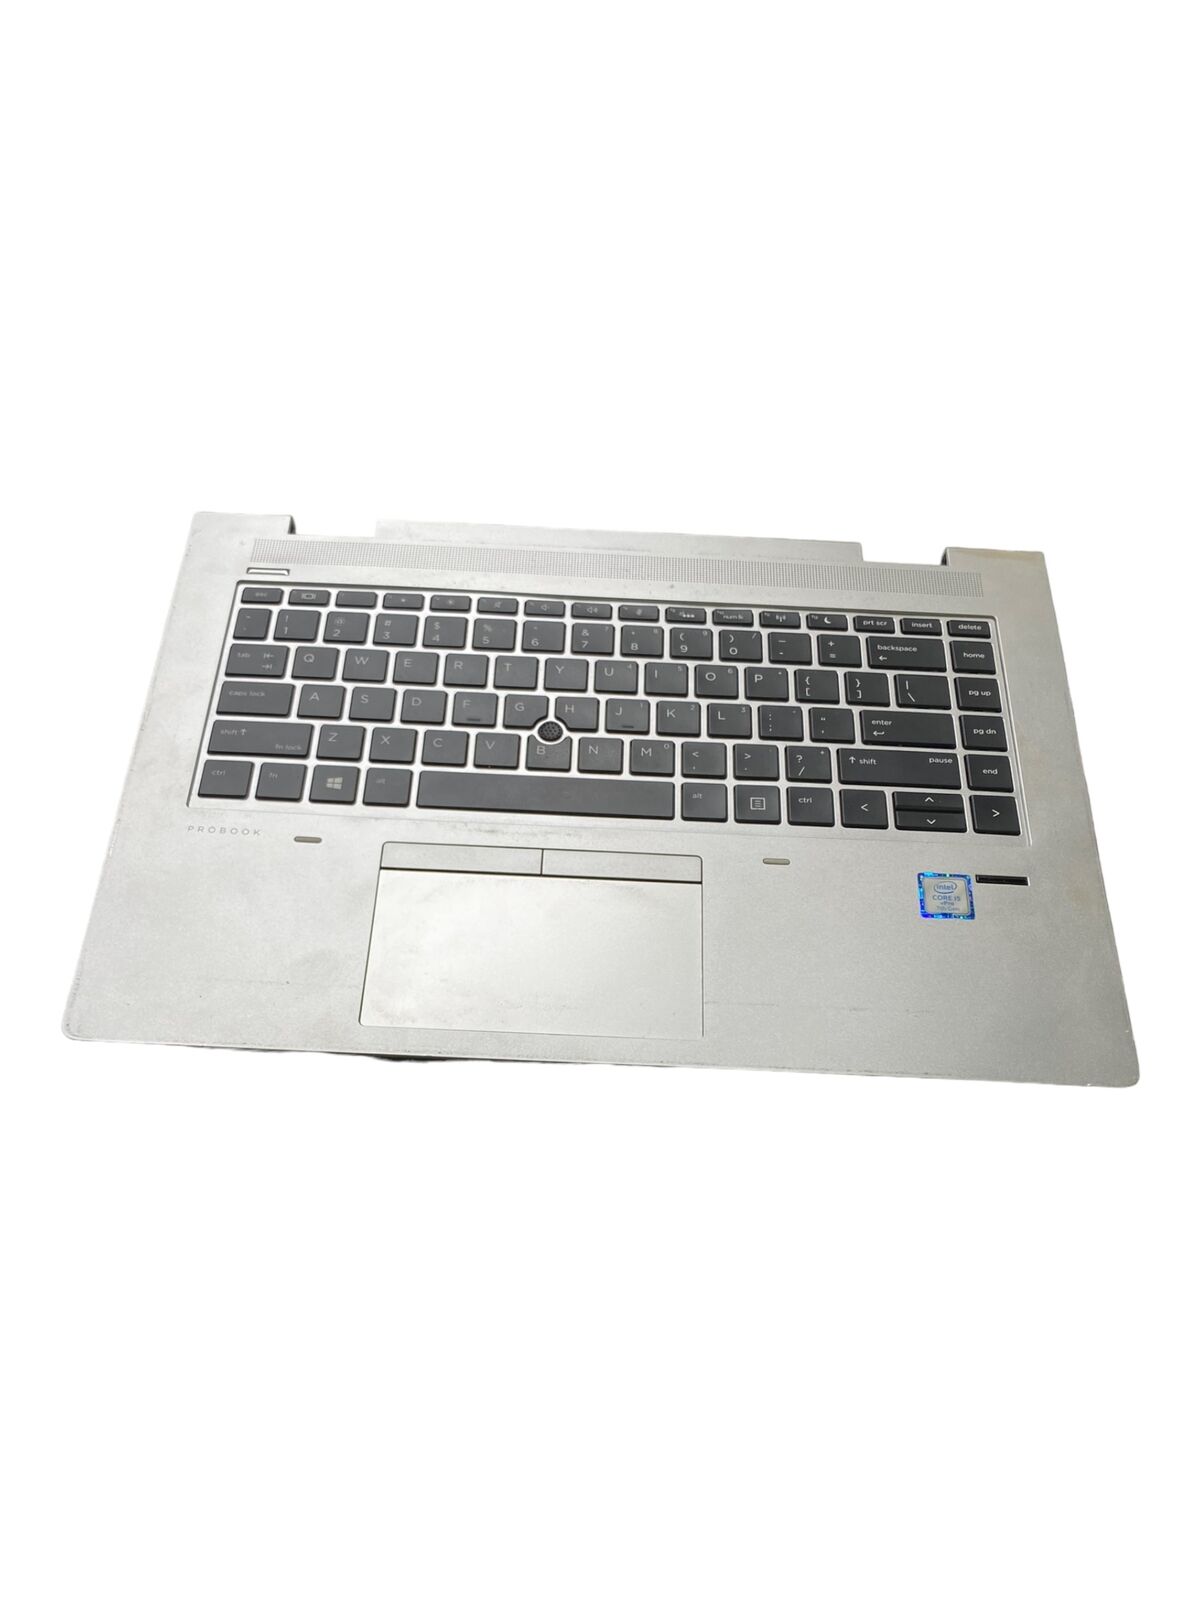 HP ProBook 640 G4 i5-7300U 2.6GHz 256GB 8GB WIN11 Laptop Palmrest Keyboard